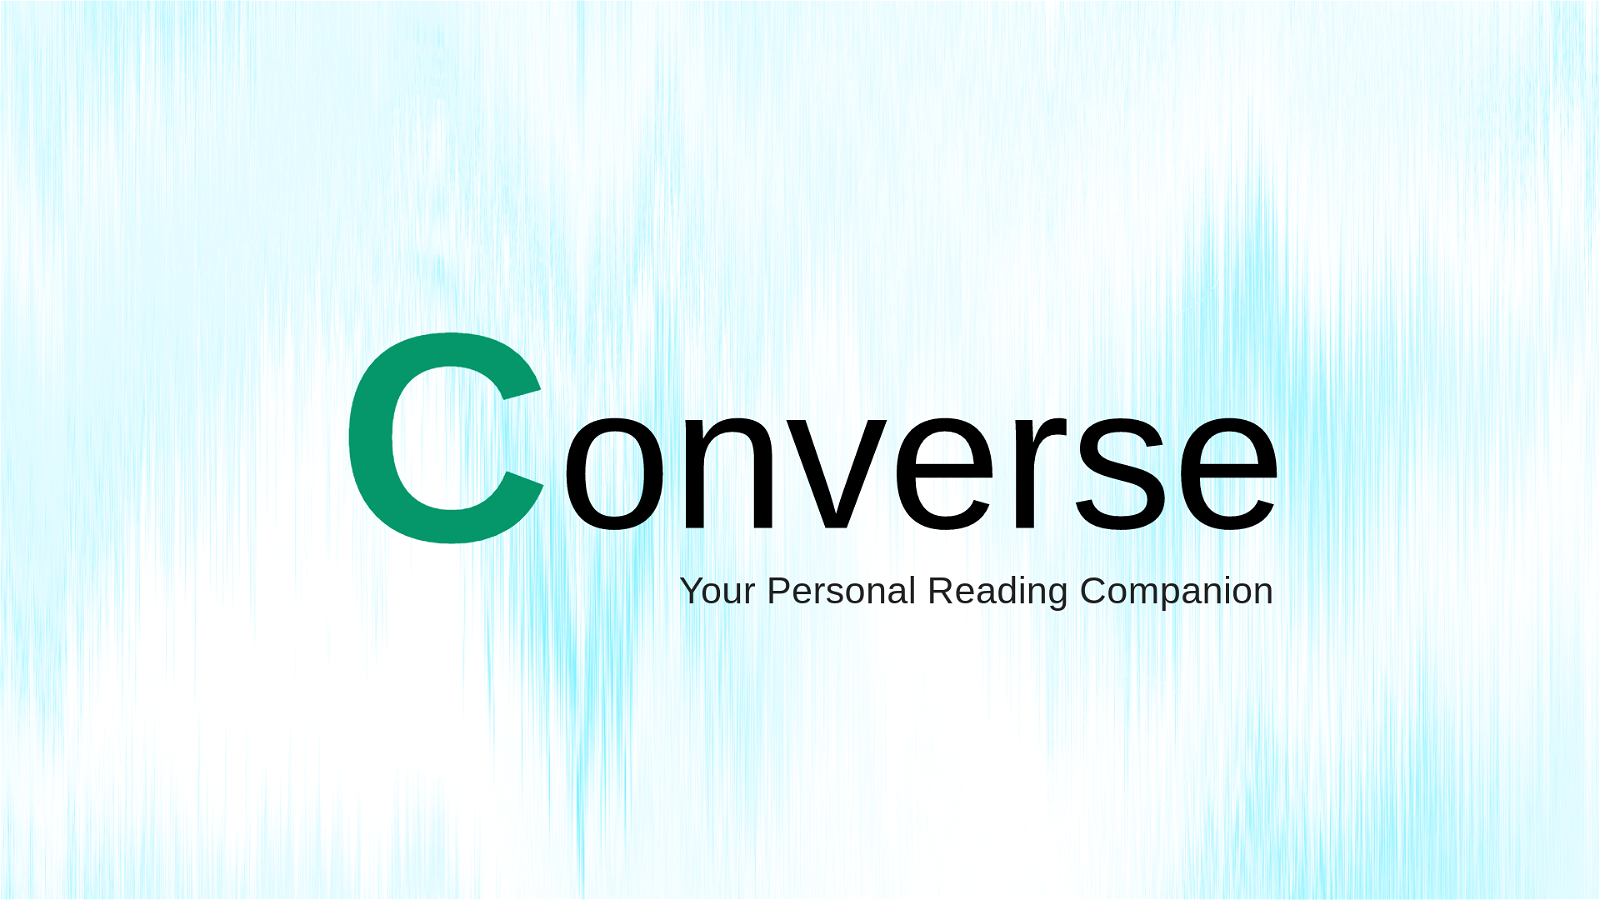 Converse website